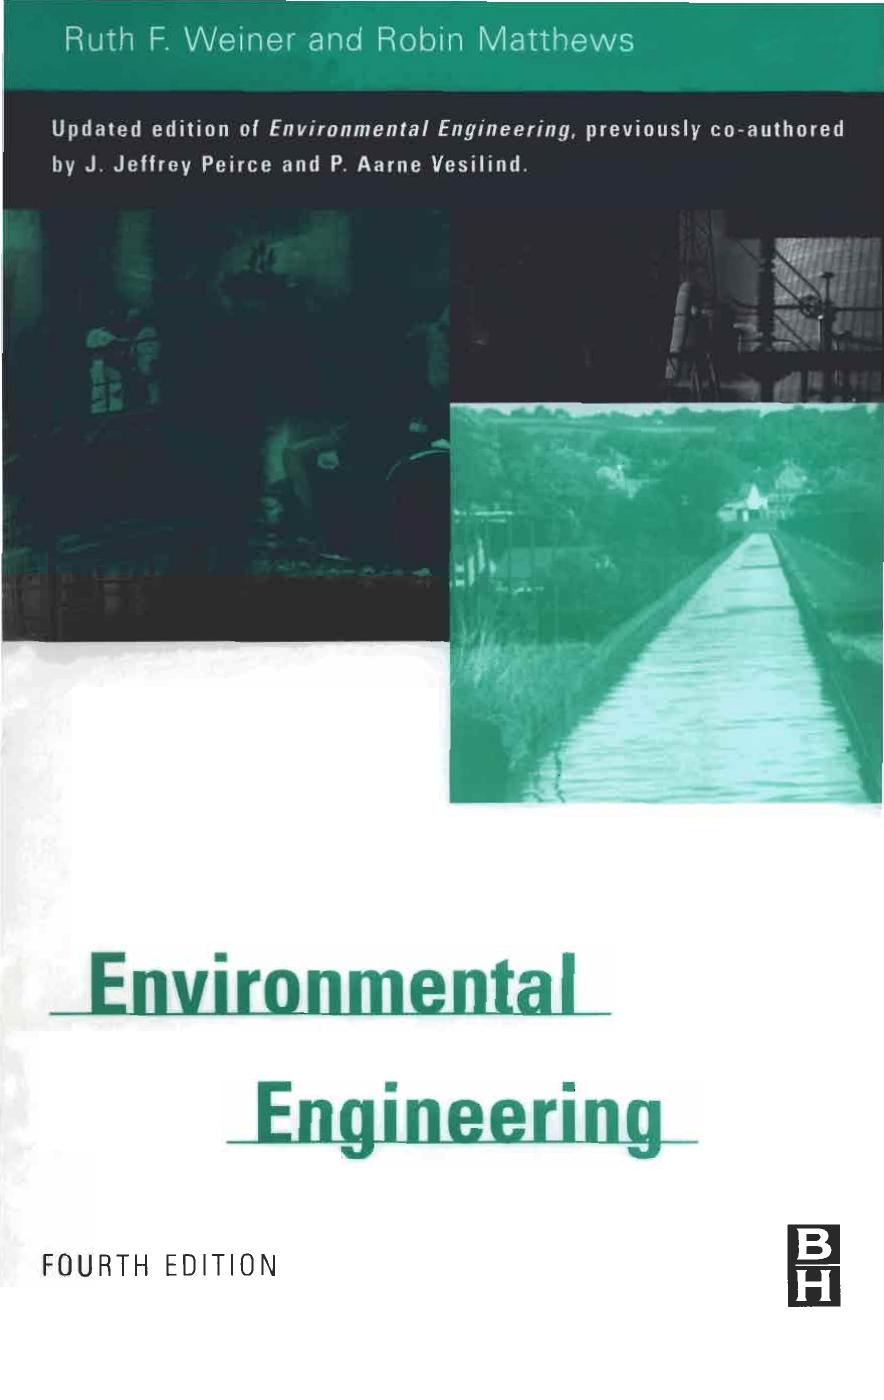 Environmental Engineering FOURTH EDITION